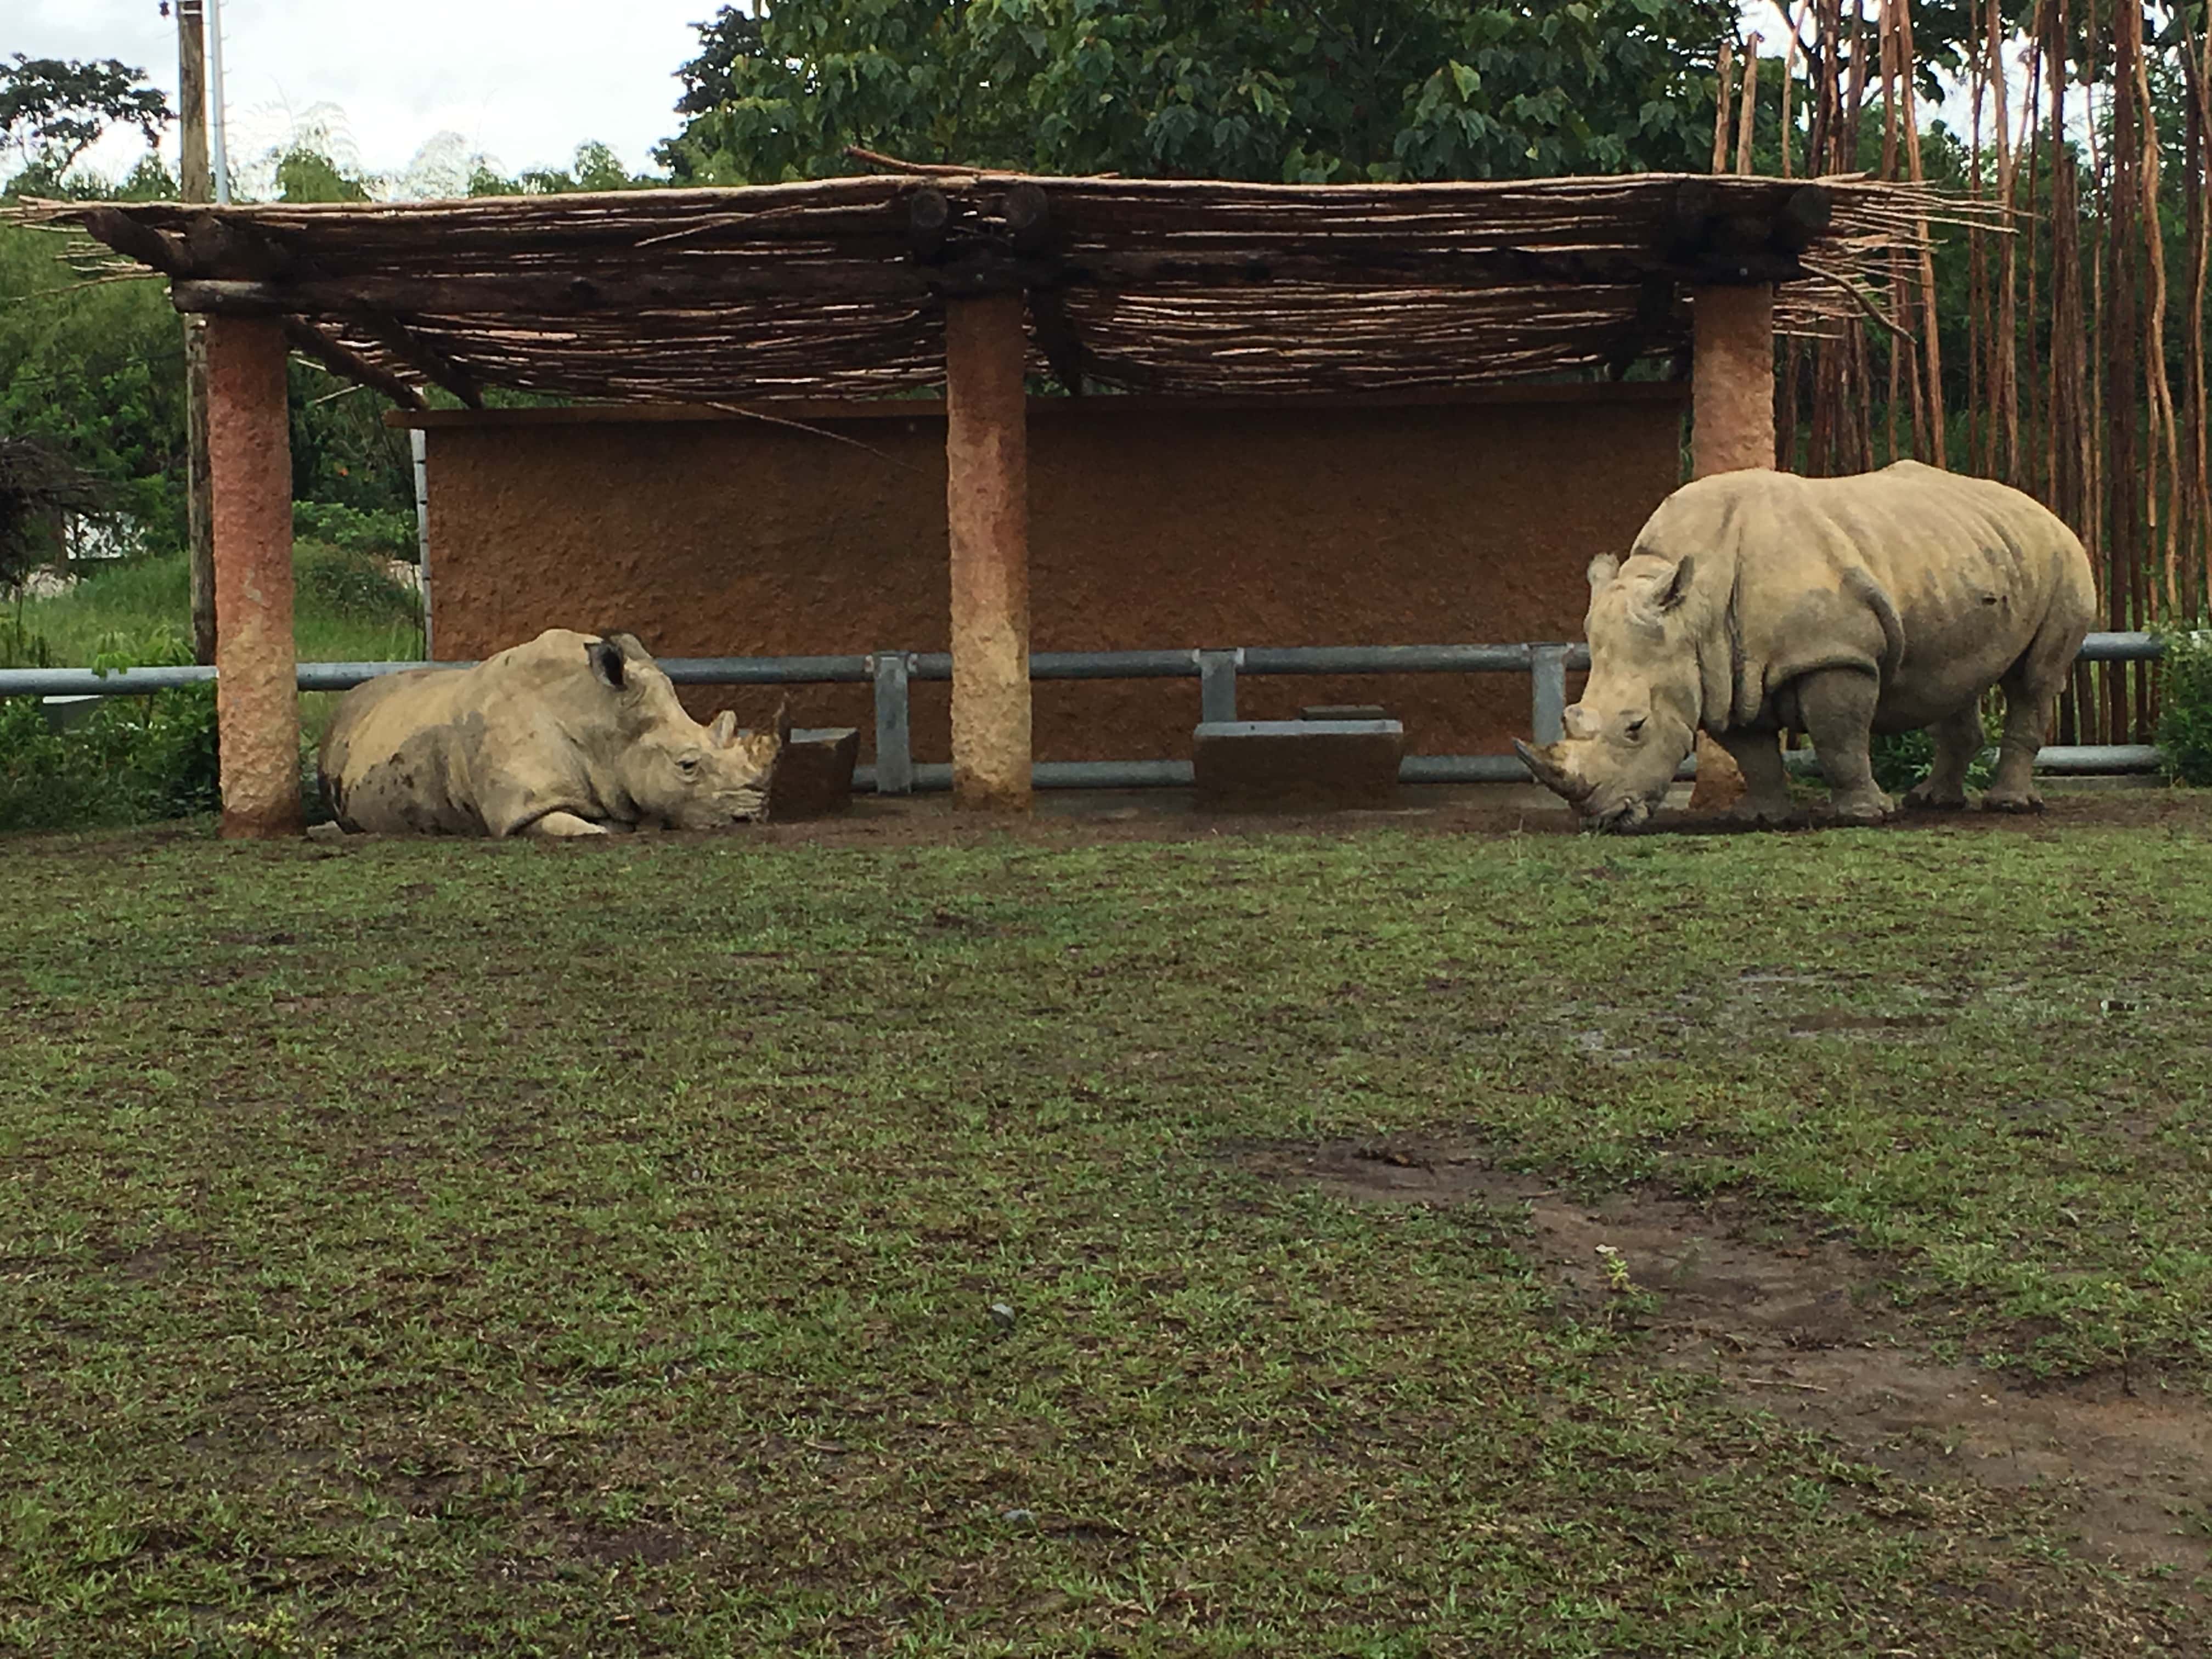 Rhinos in the African Savanna at Bioparque Ukumarí in Risaralda, Colombia